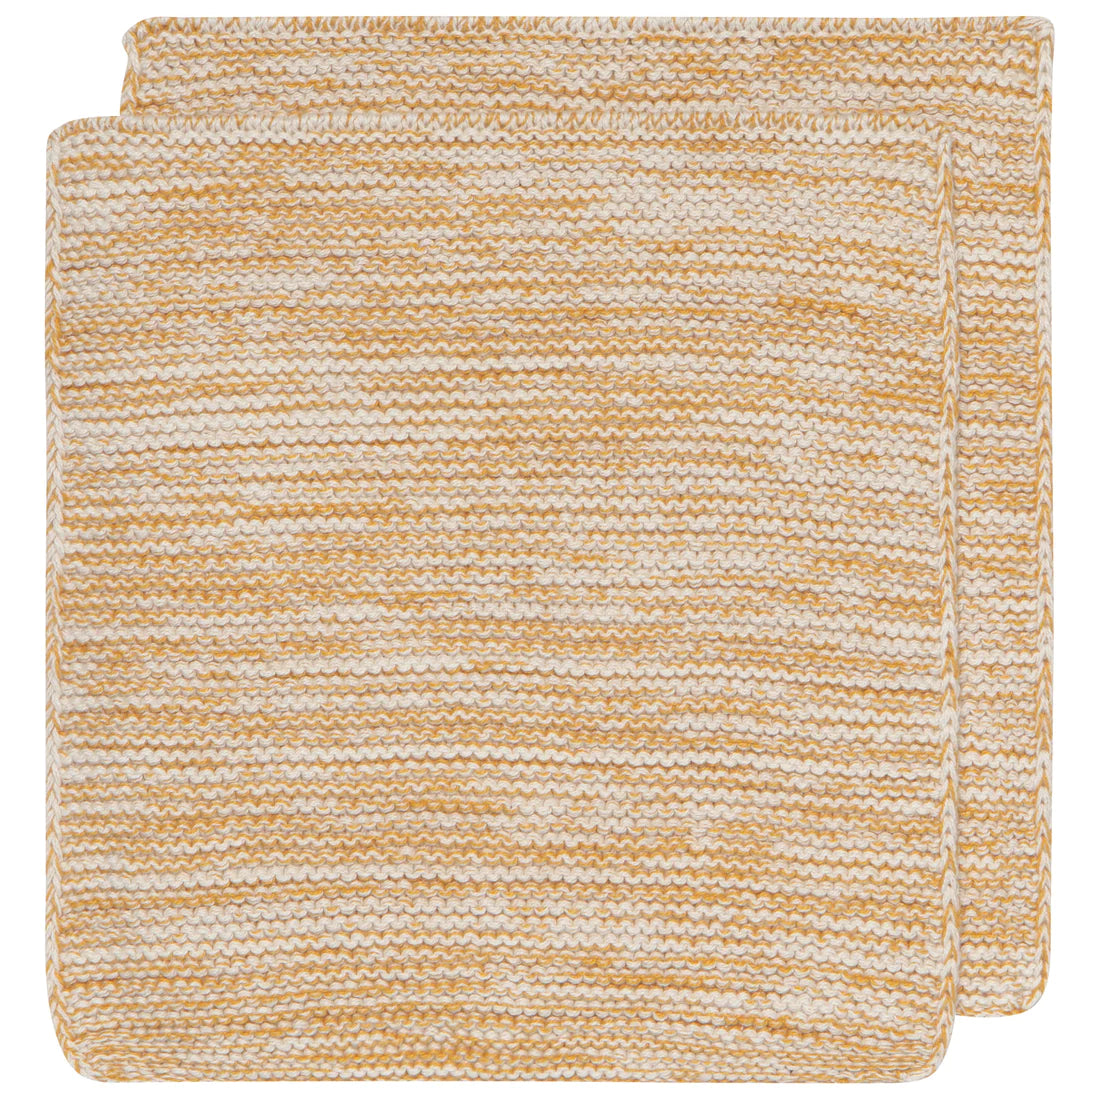 Handmade Cotton Knit Dishcloths - Set of 2 Ochre